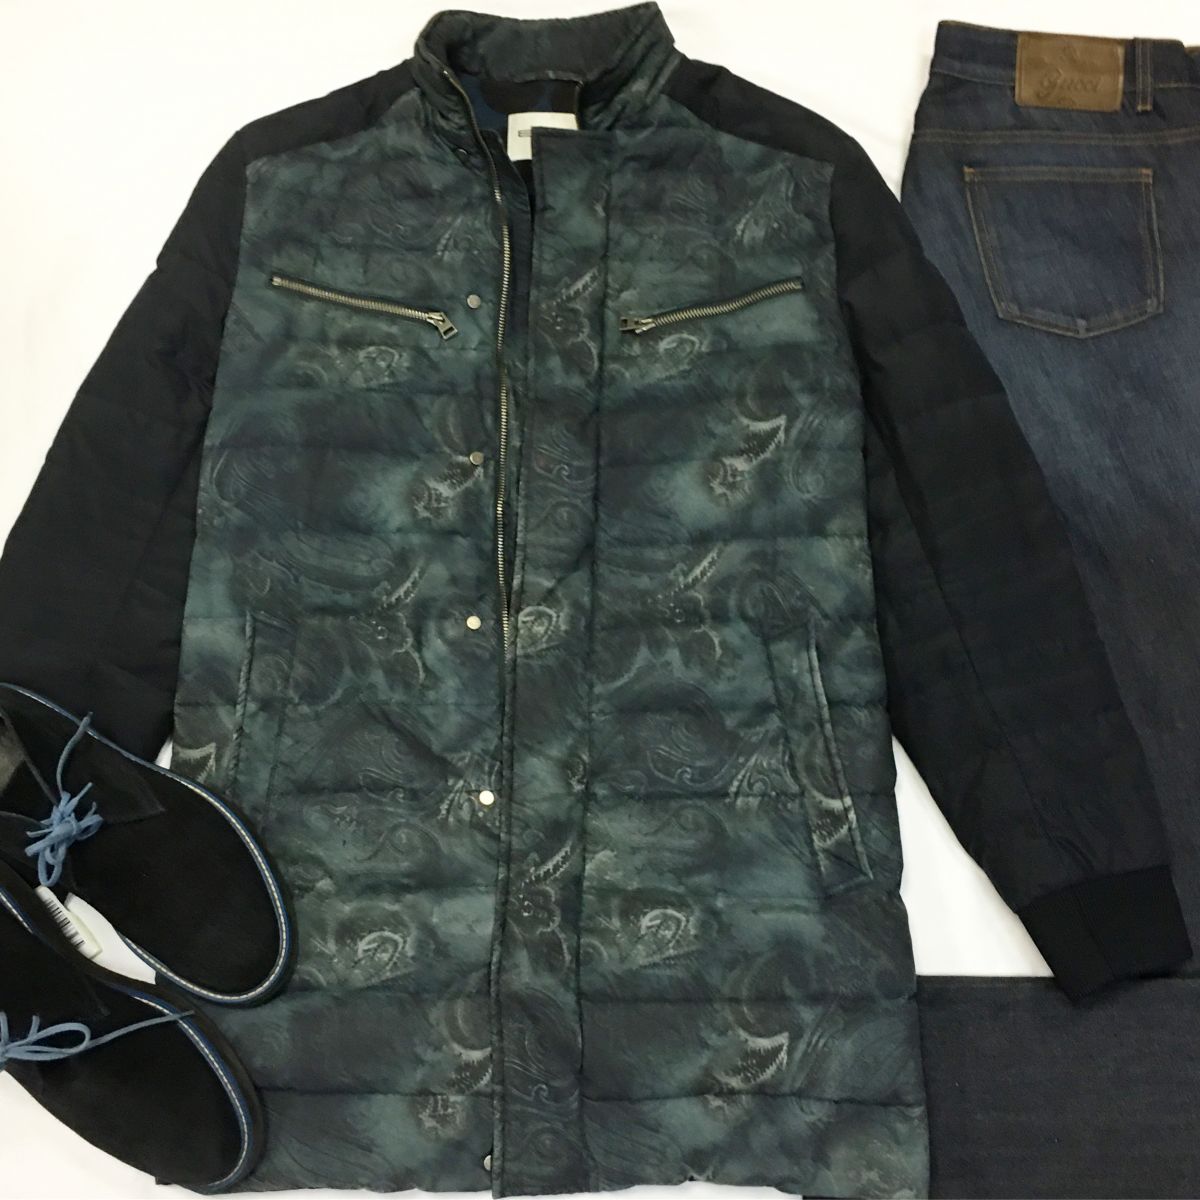 Куртка Etro размер M цена 20 000 руб Джинсы Gucci размер 48 цена 7 693 руб Ботинки Baldinini размер 43 цена 7 693 руб